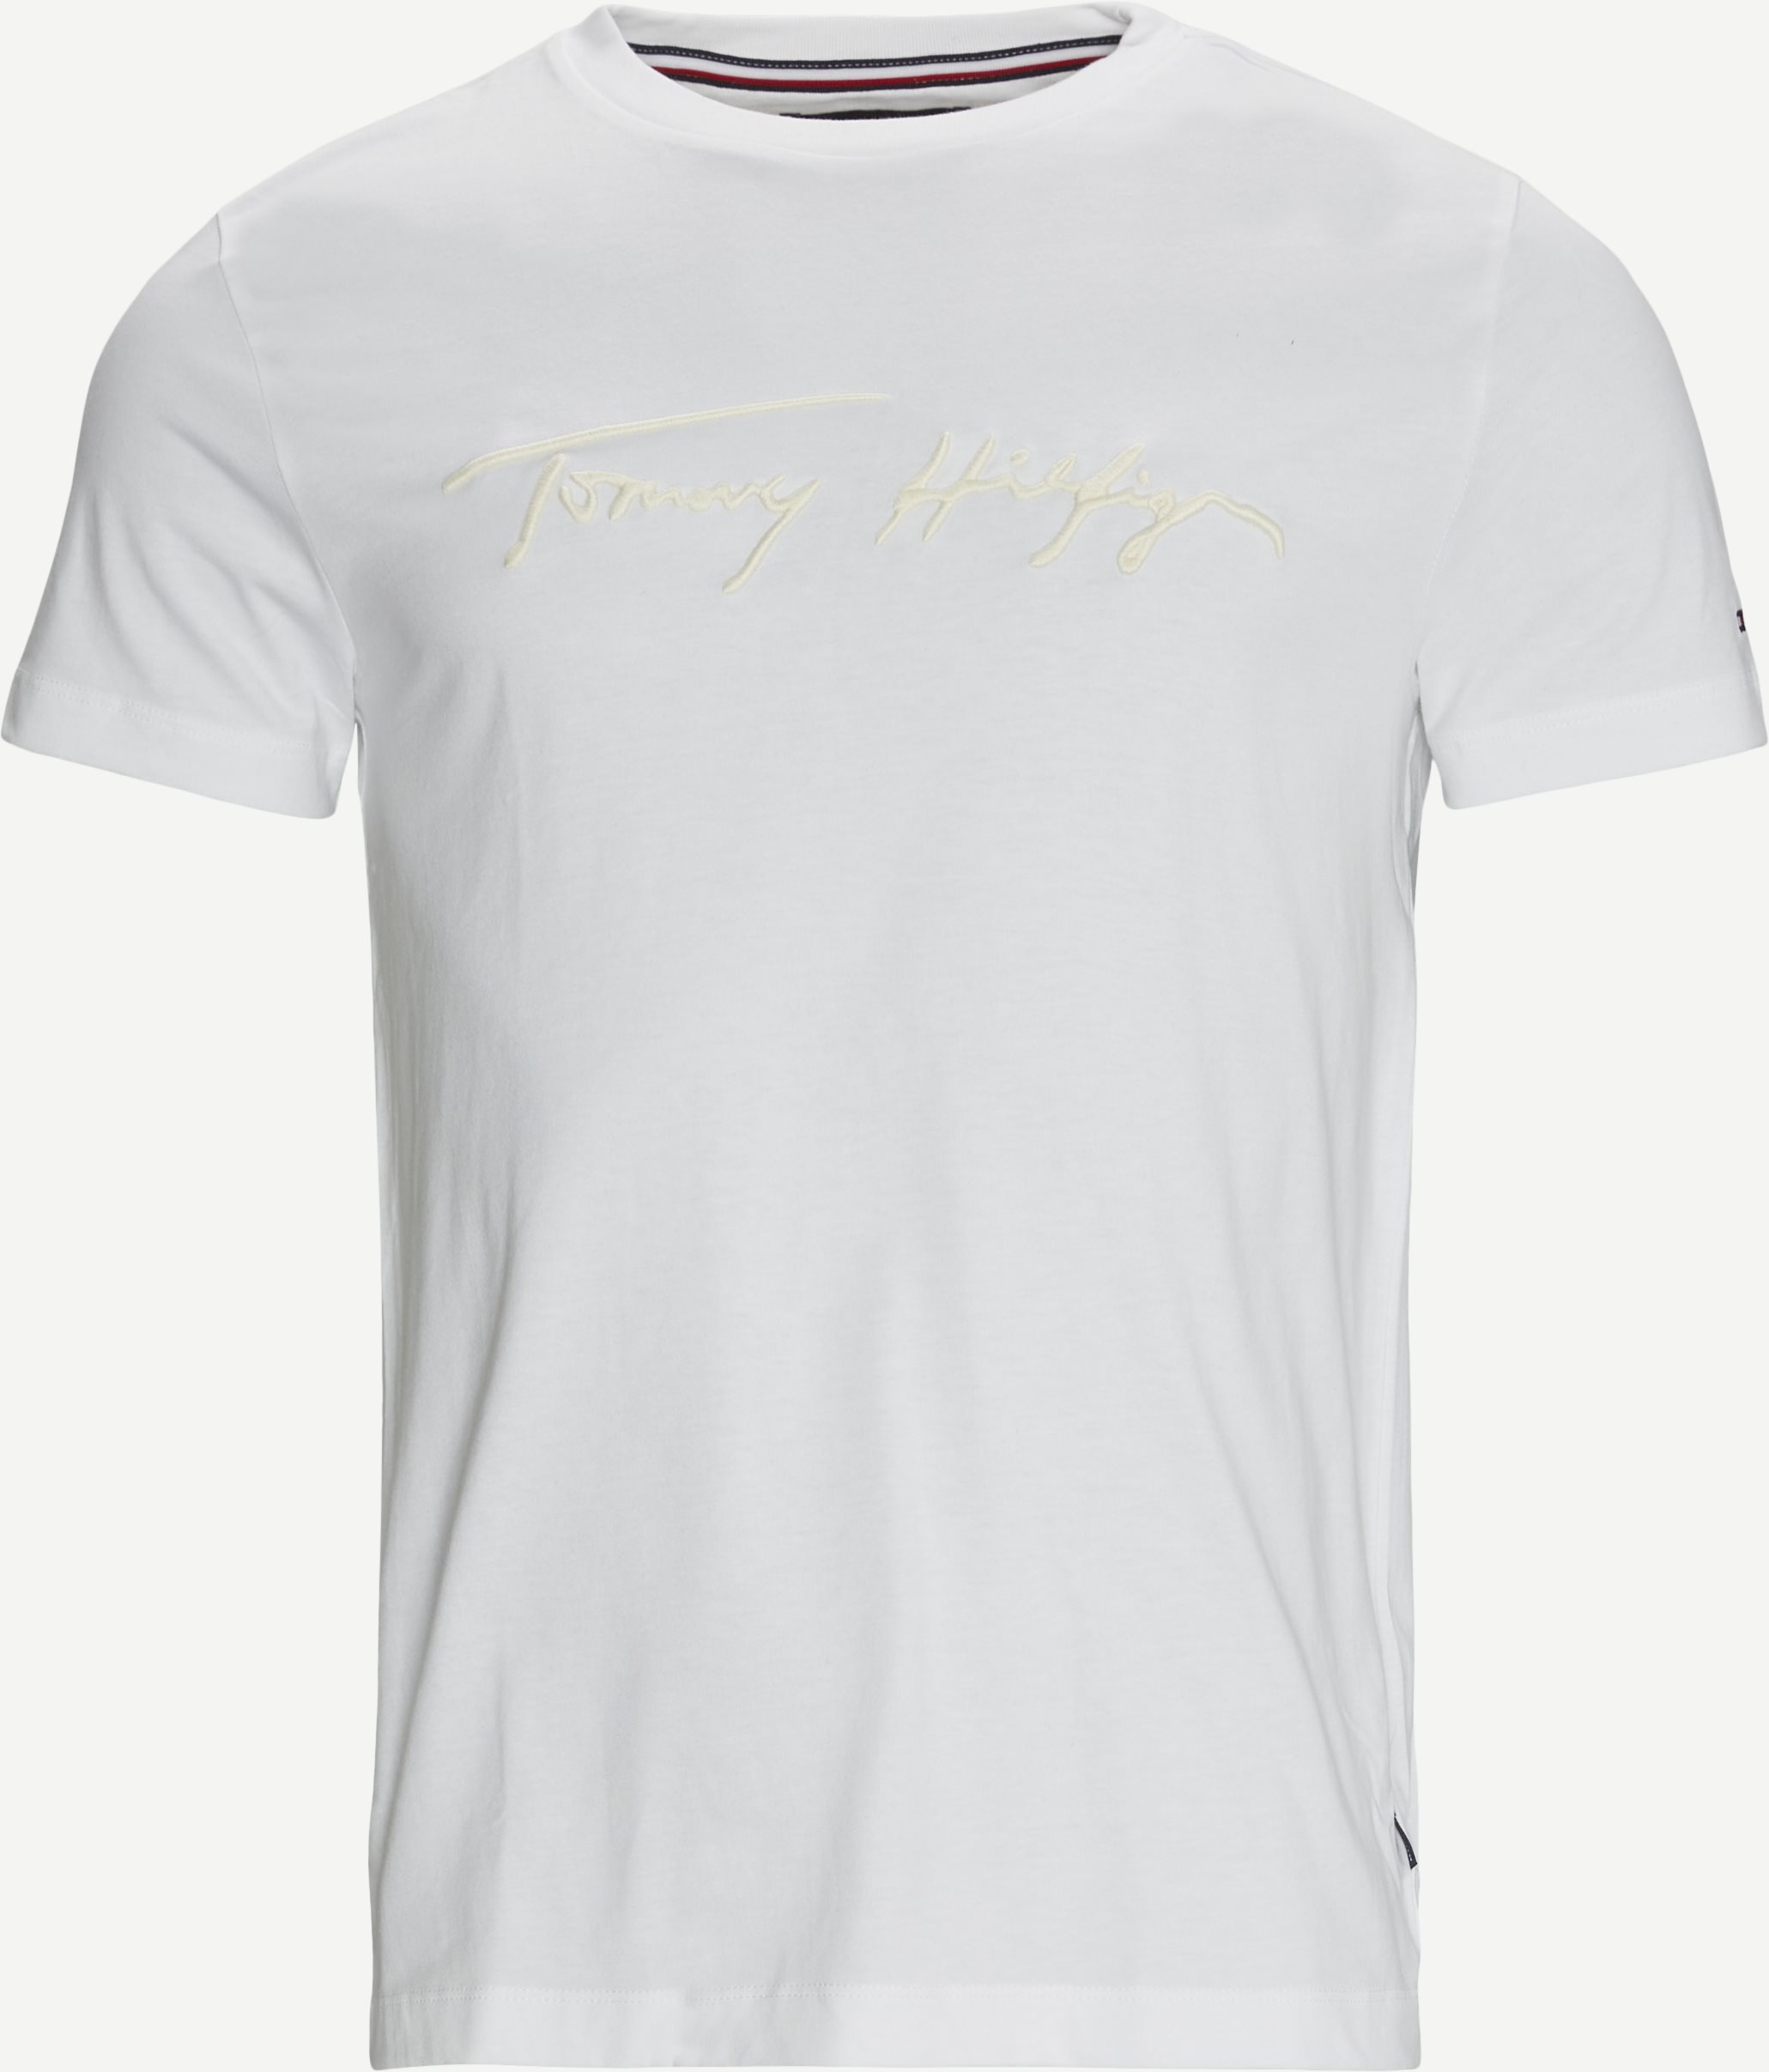 Signature Graphic T-shirt - T-shirts - Regular fit - Hvid